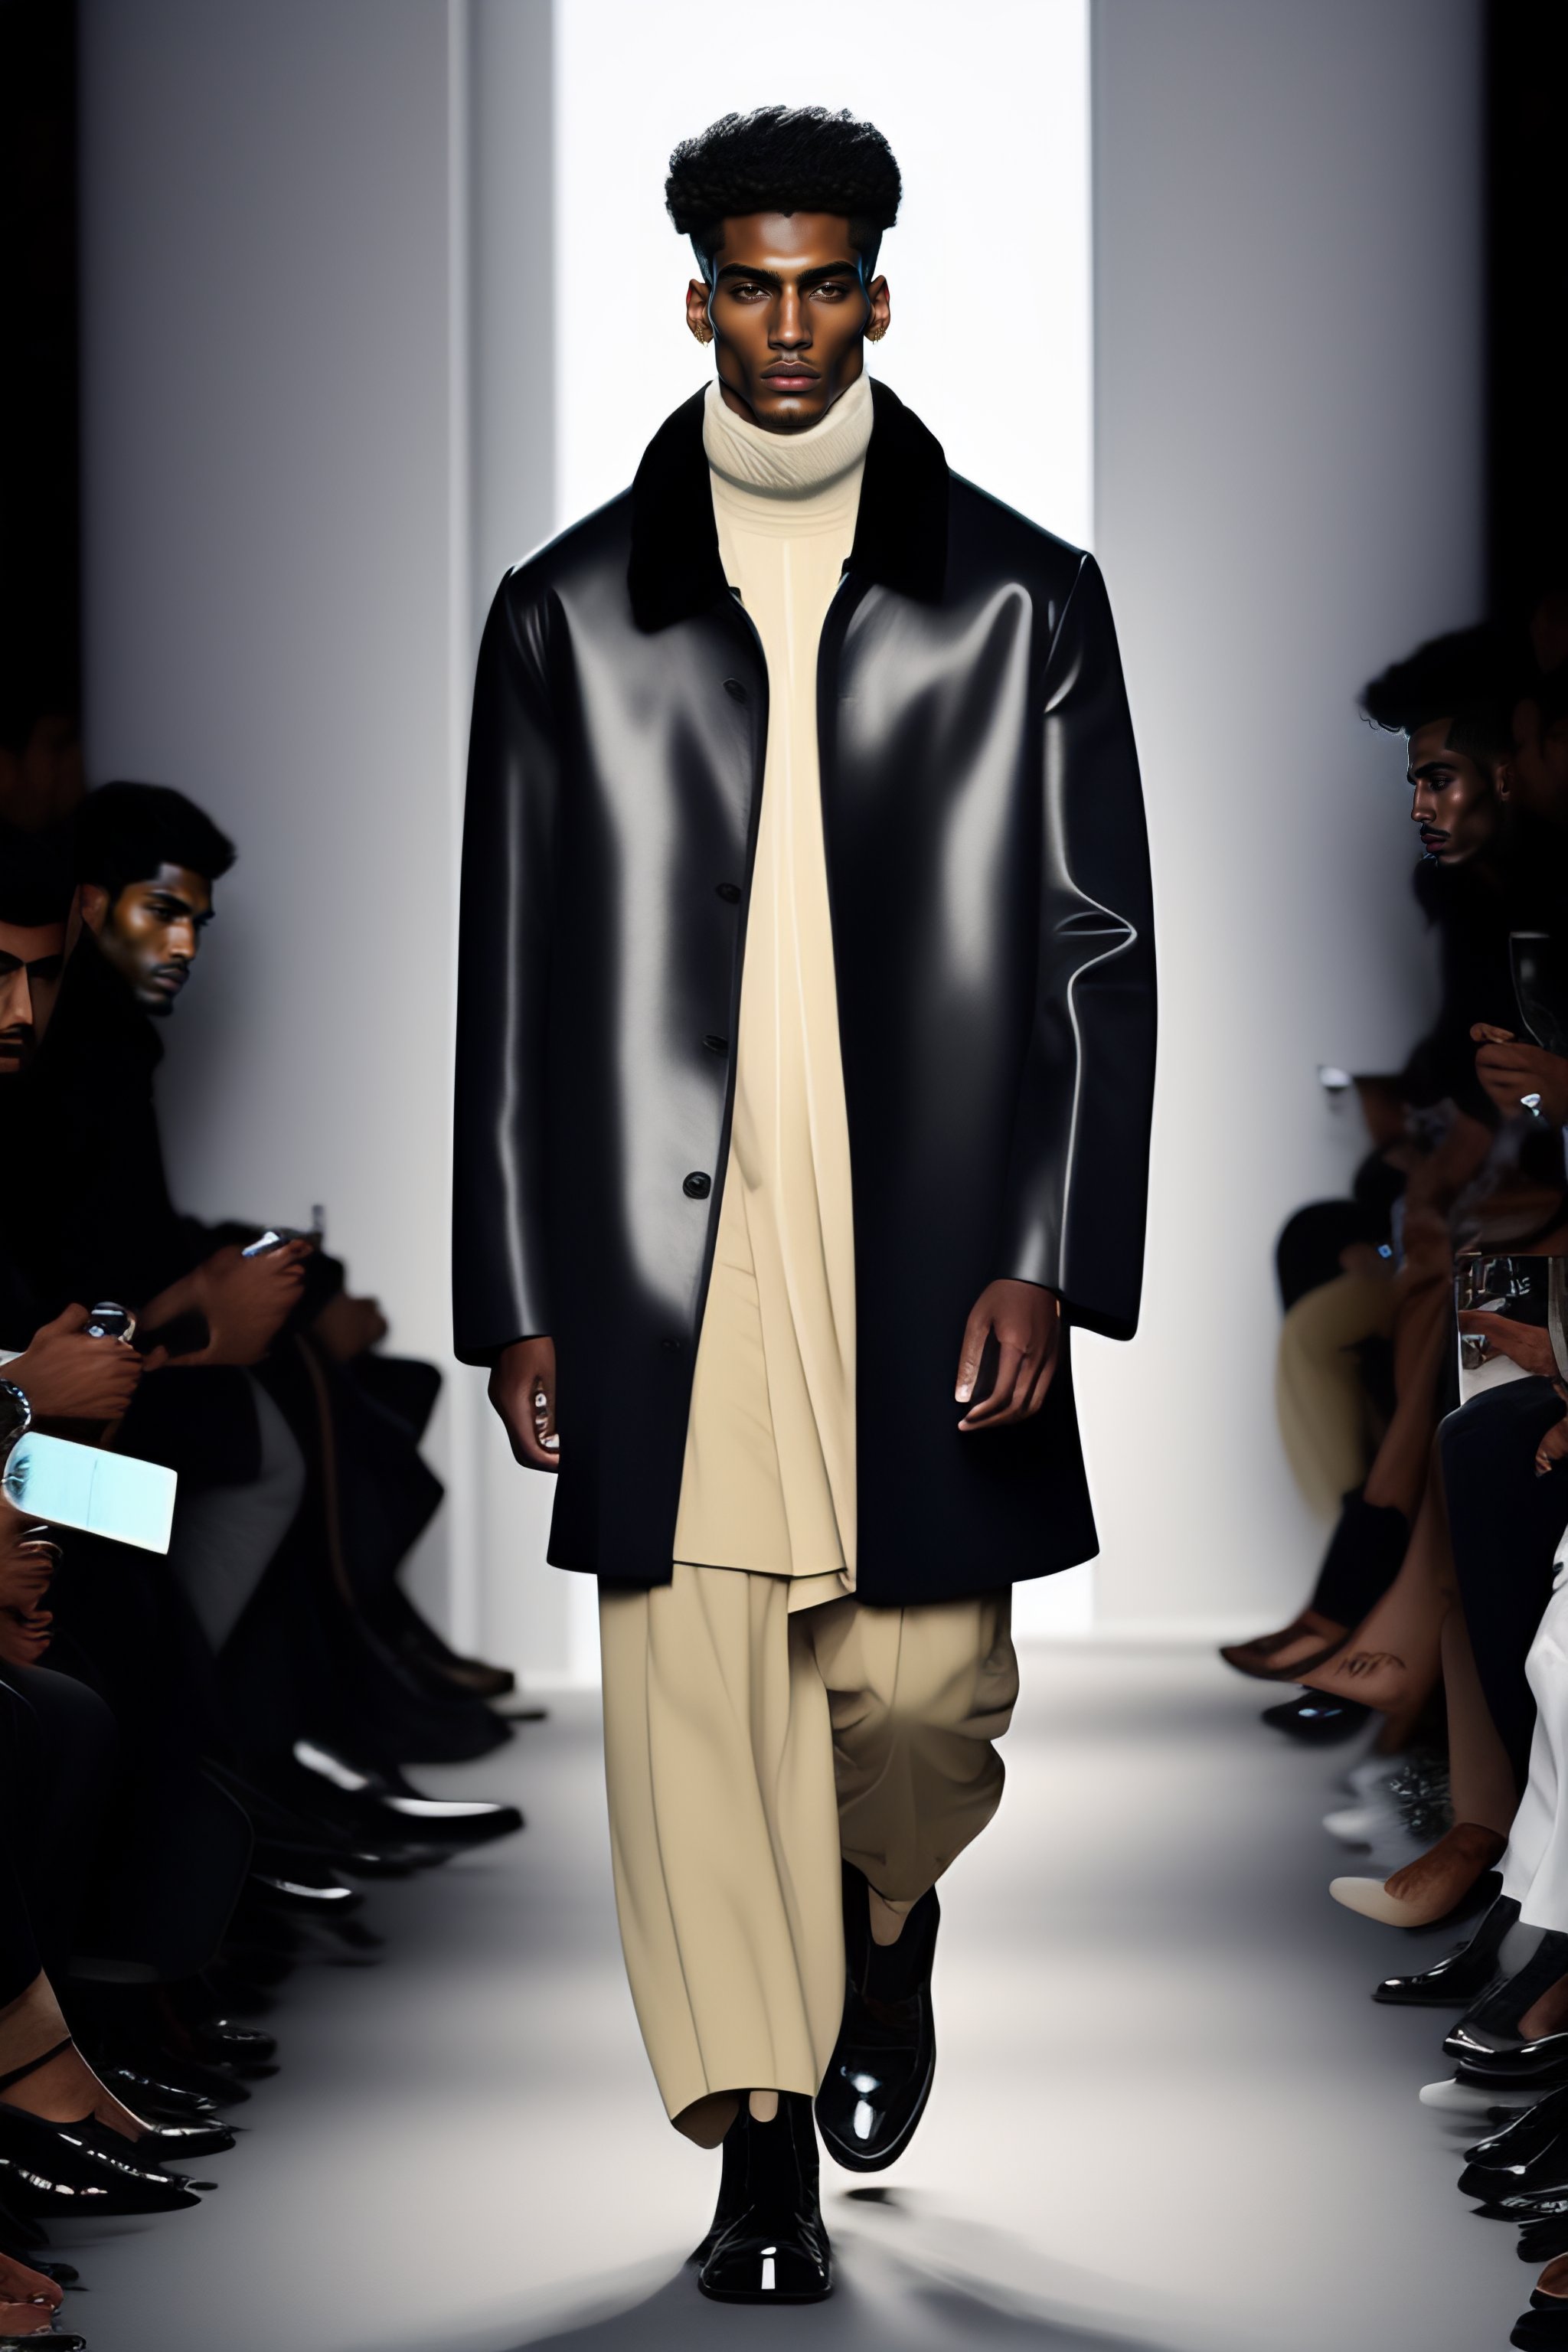 Lexica - Arab male model walking dow the catwalk, fashion, streetwear ...